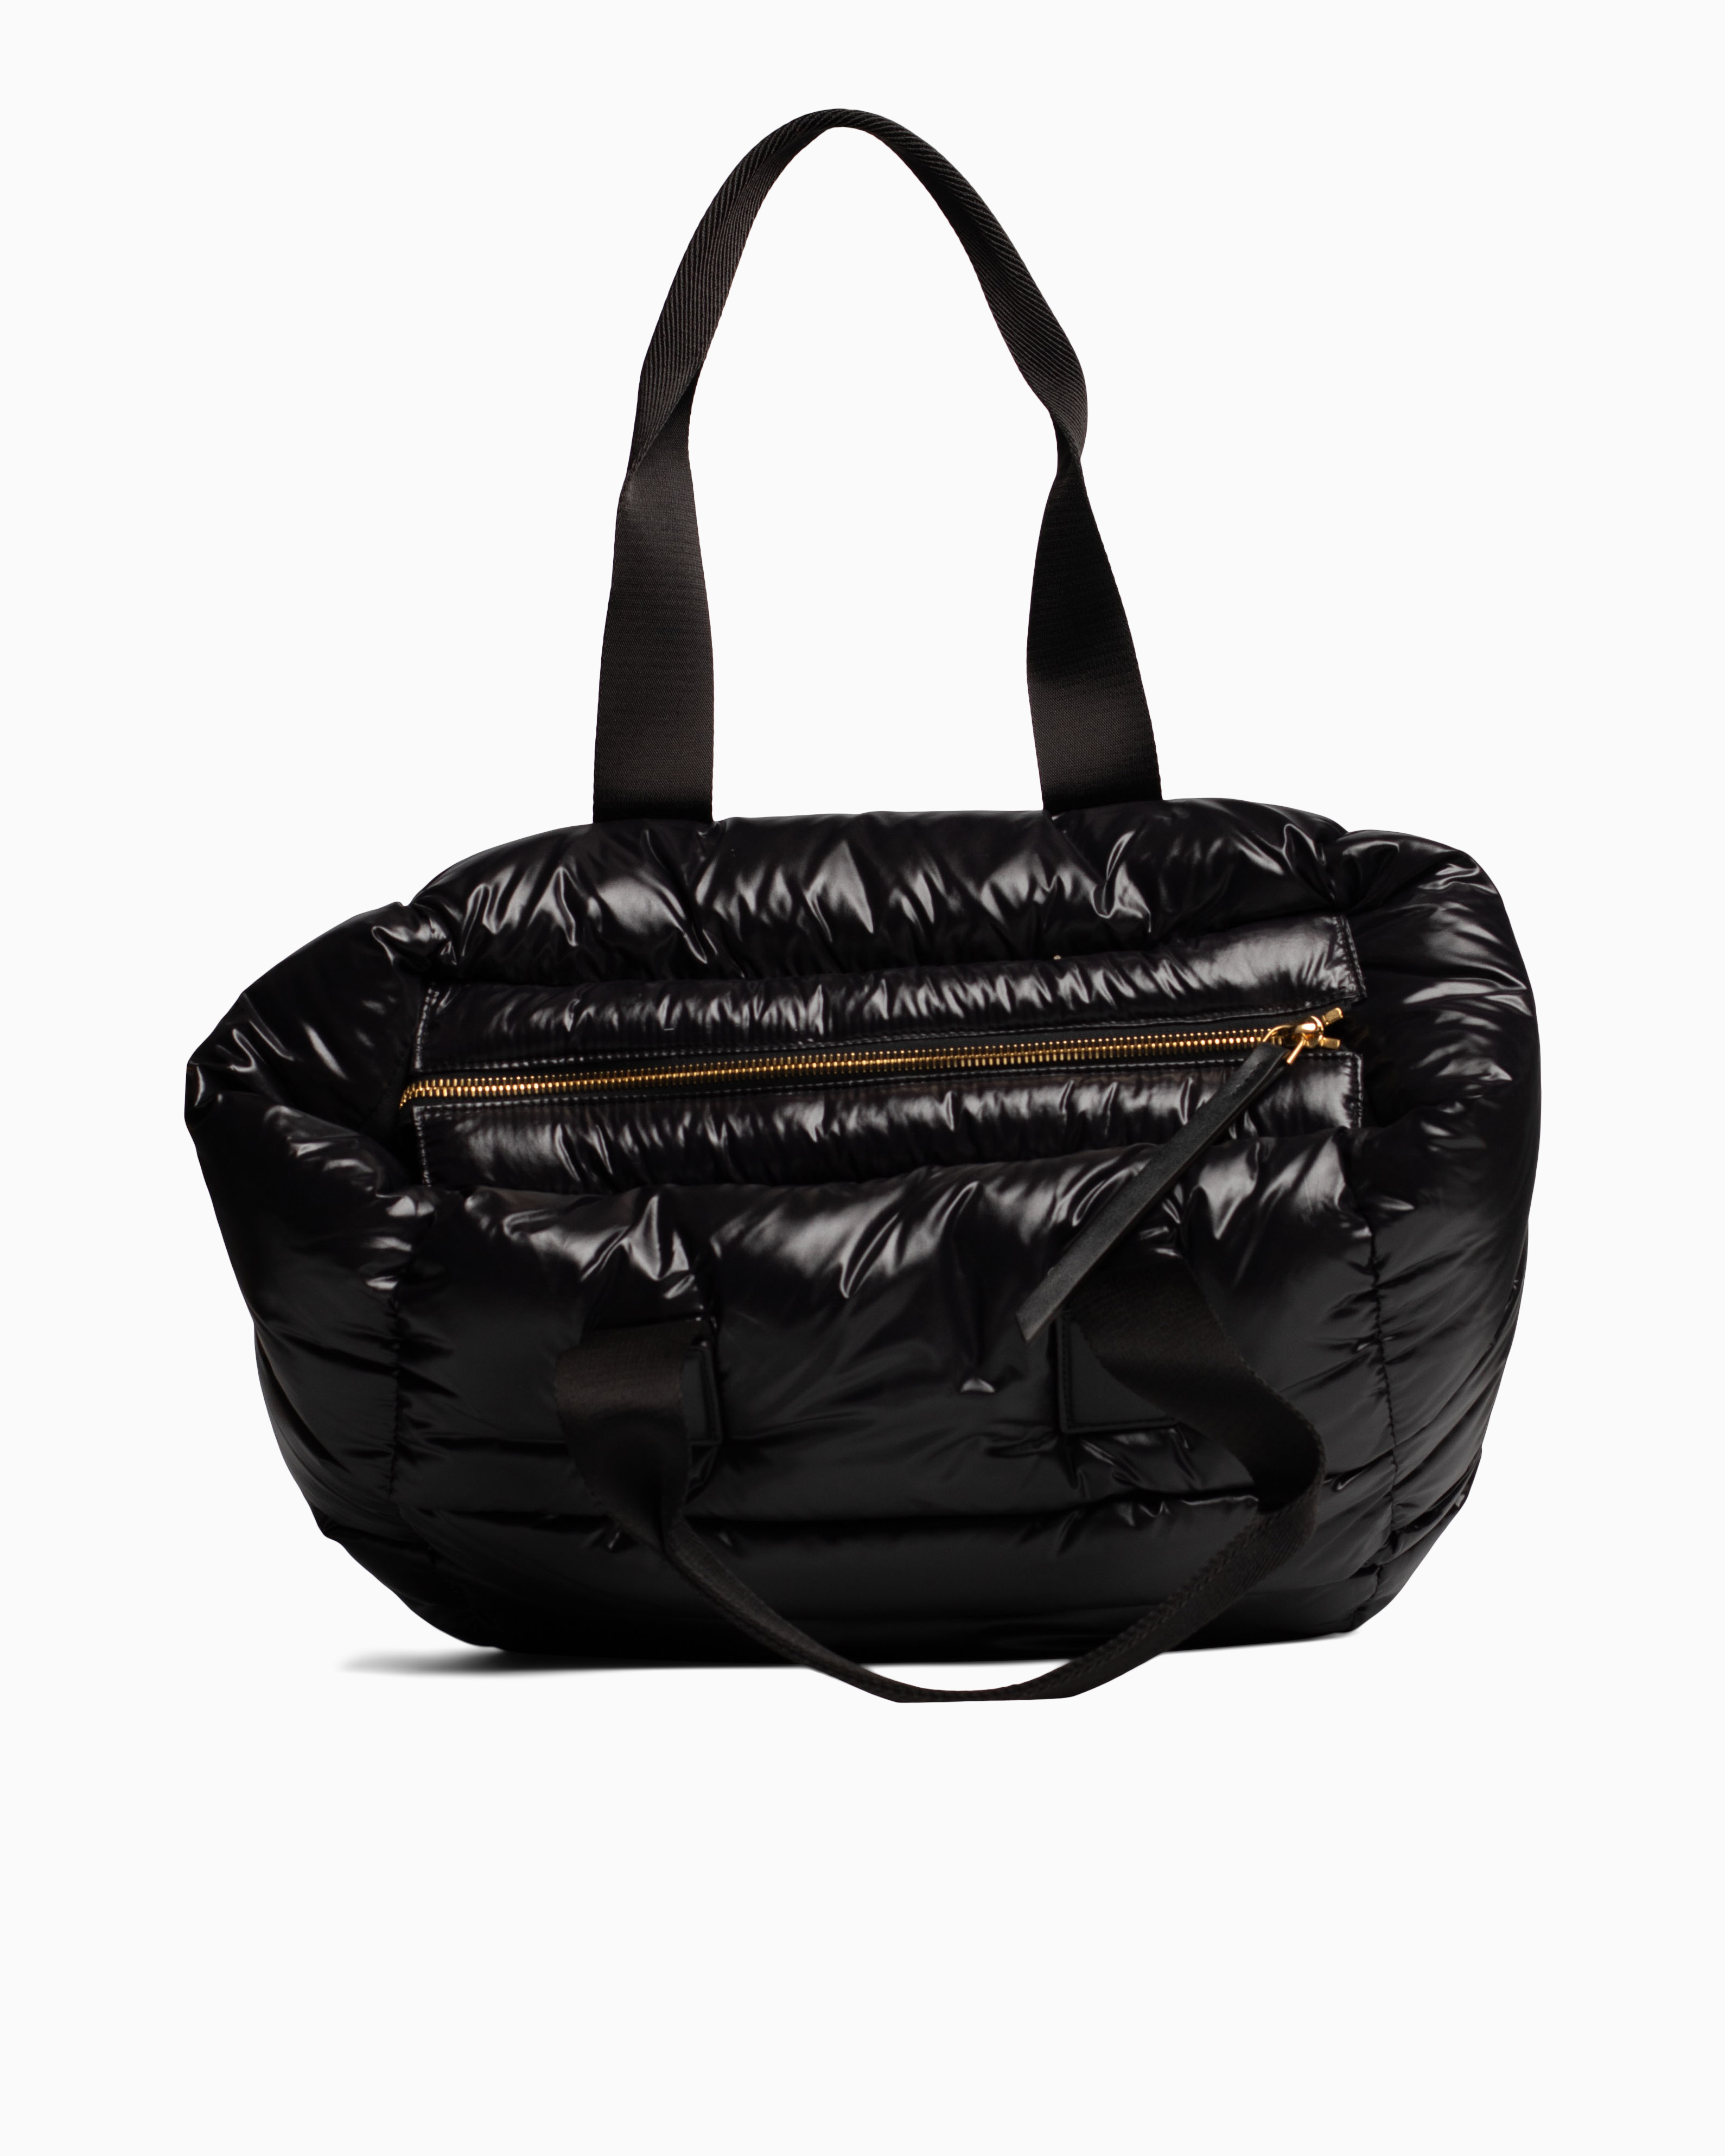 Caradoc Bag Moncler Accessories_Clothing Bags Black